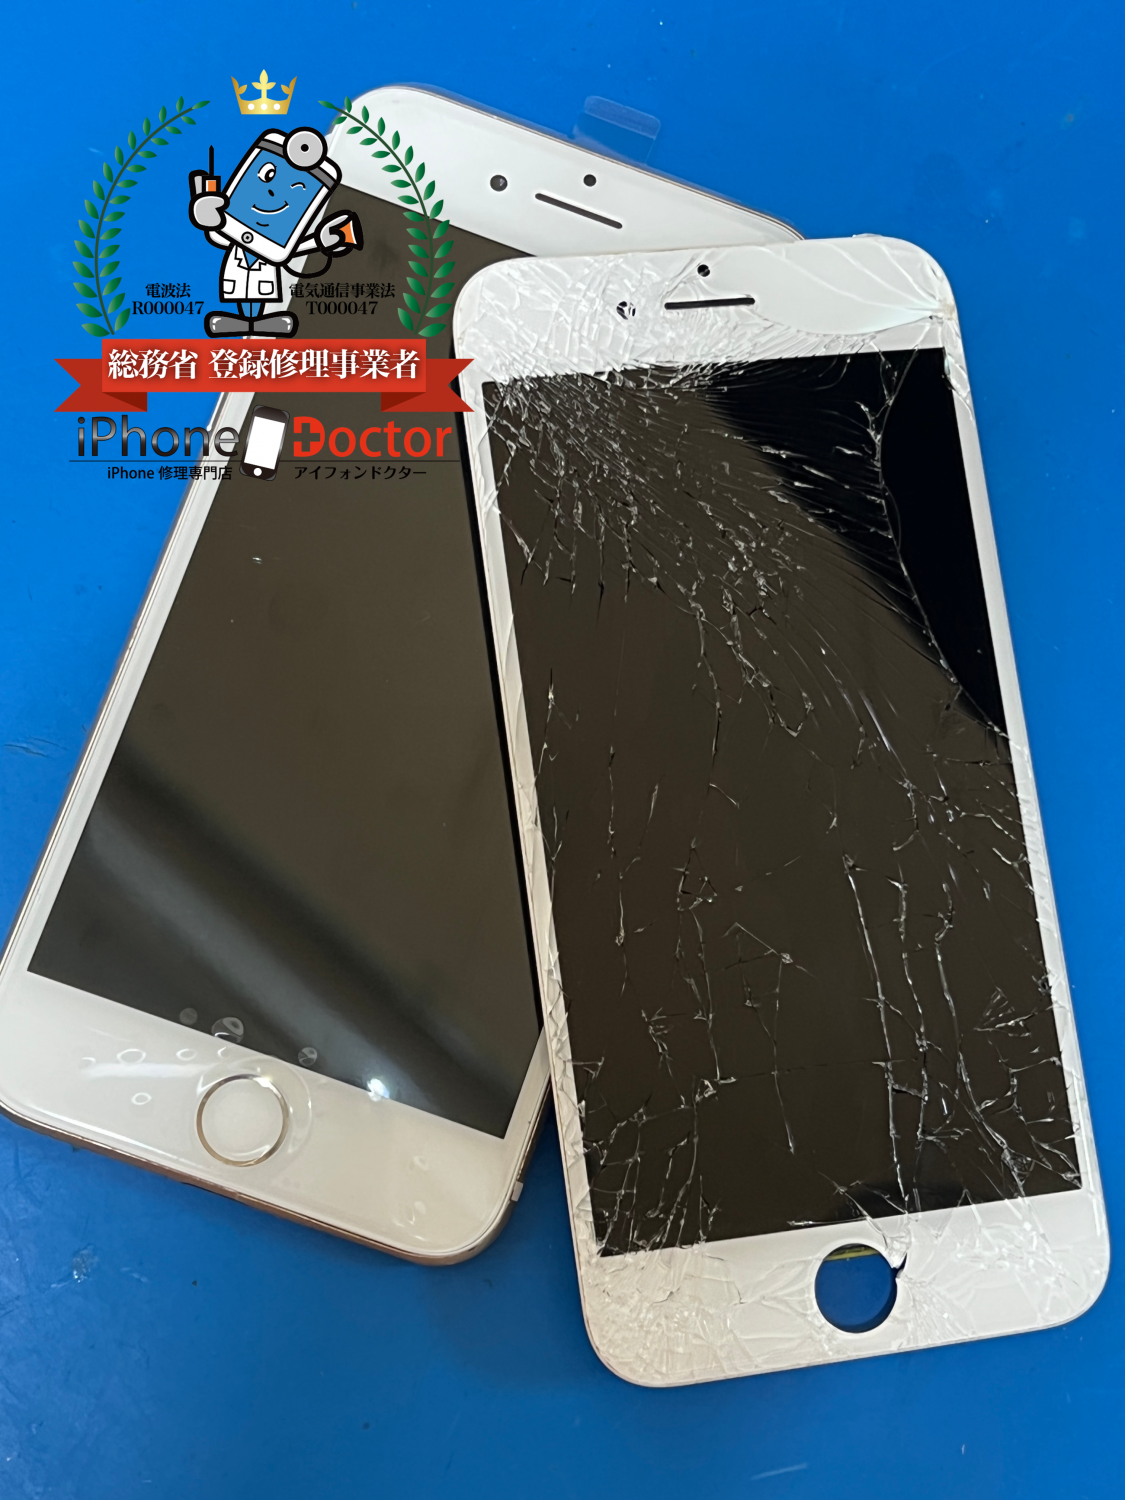 iPhone7ガラス割れ、液晶破損